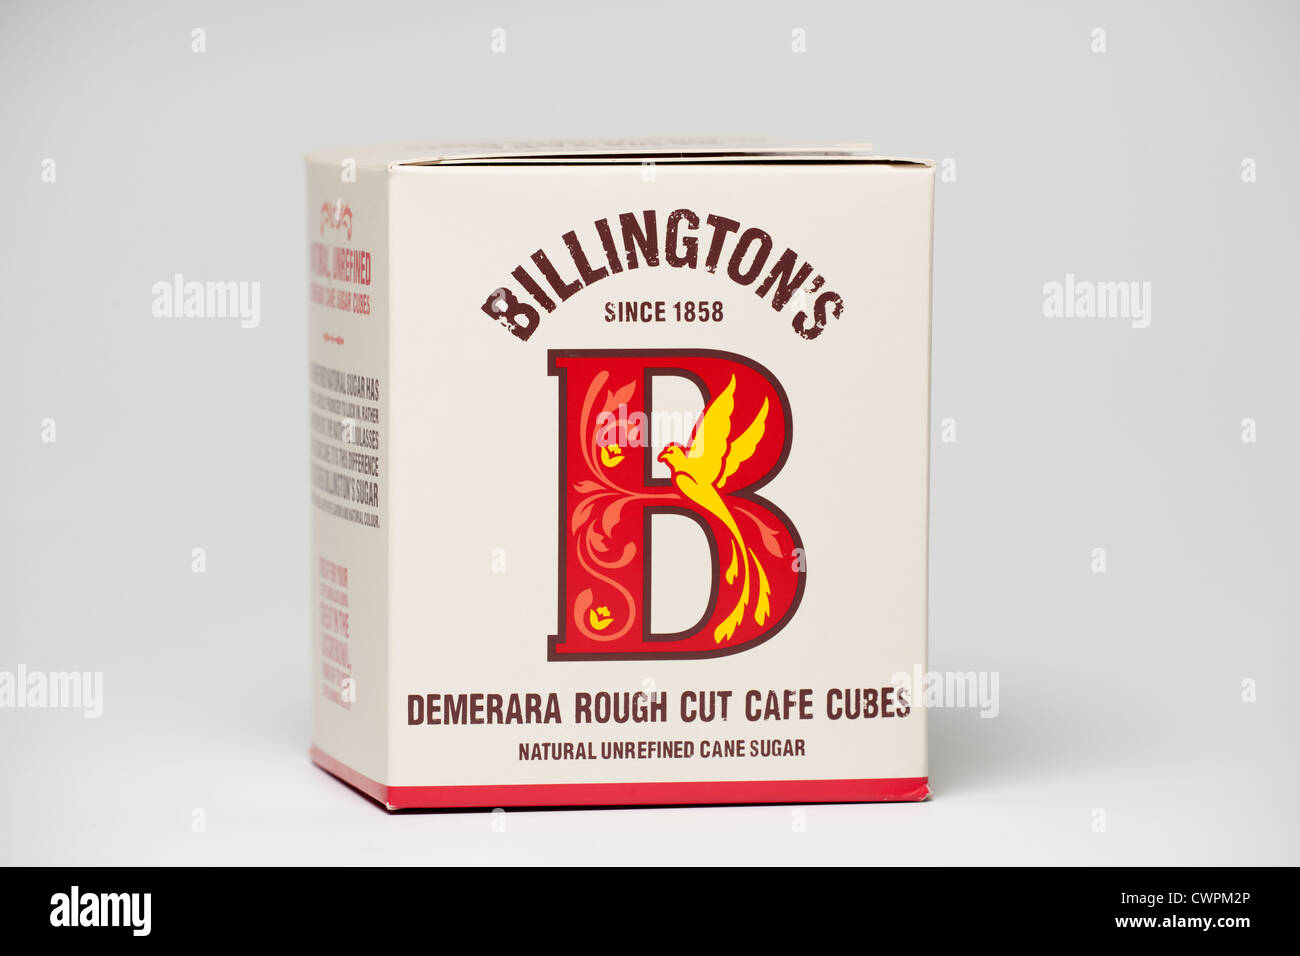 Caja de azúcar de caña sin refinar natural Billingtons Demerara toscamente cortadas cubos de café Foto de stock